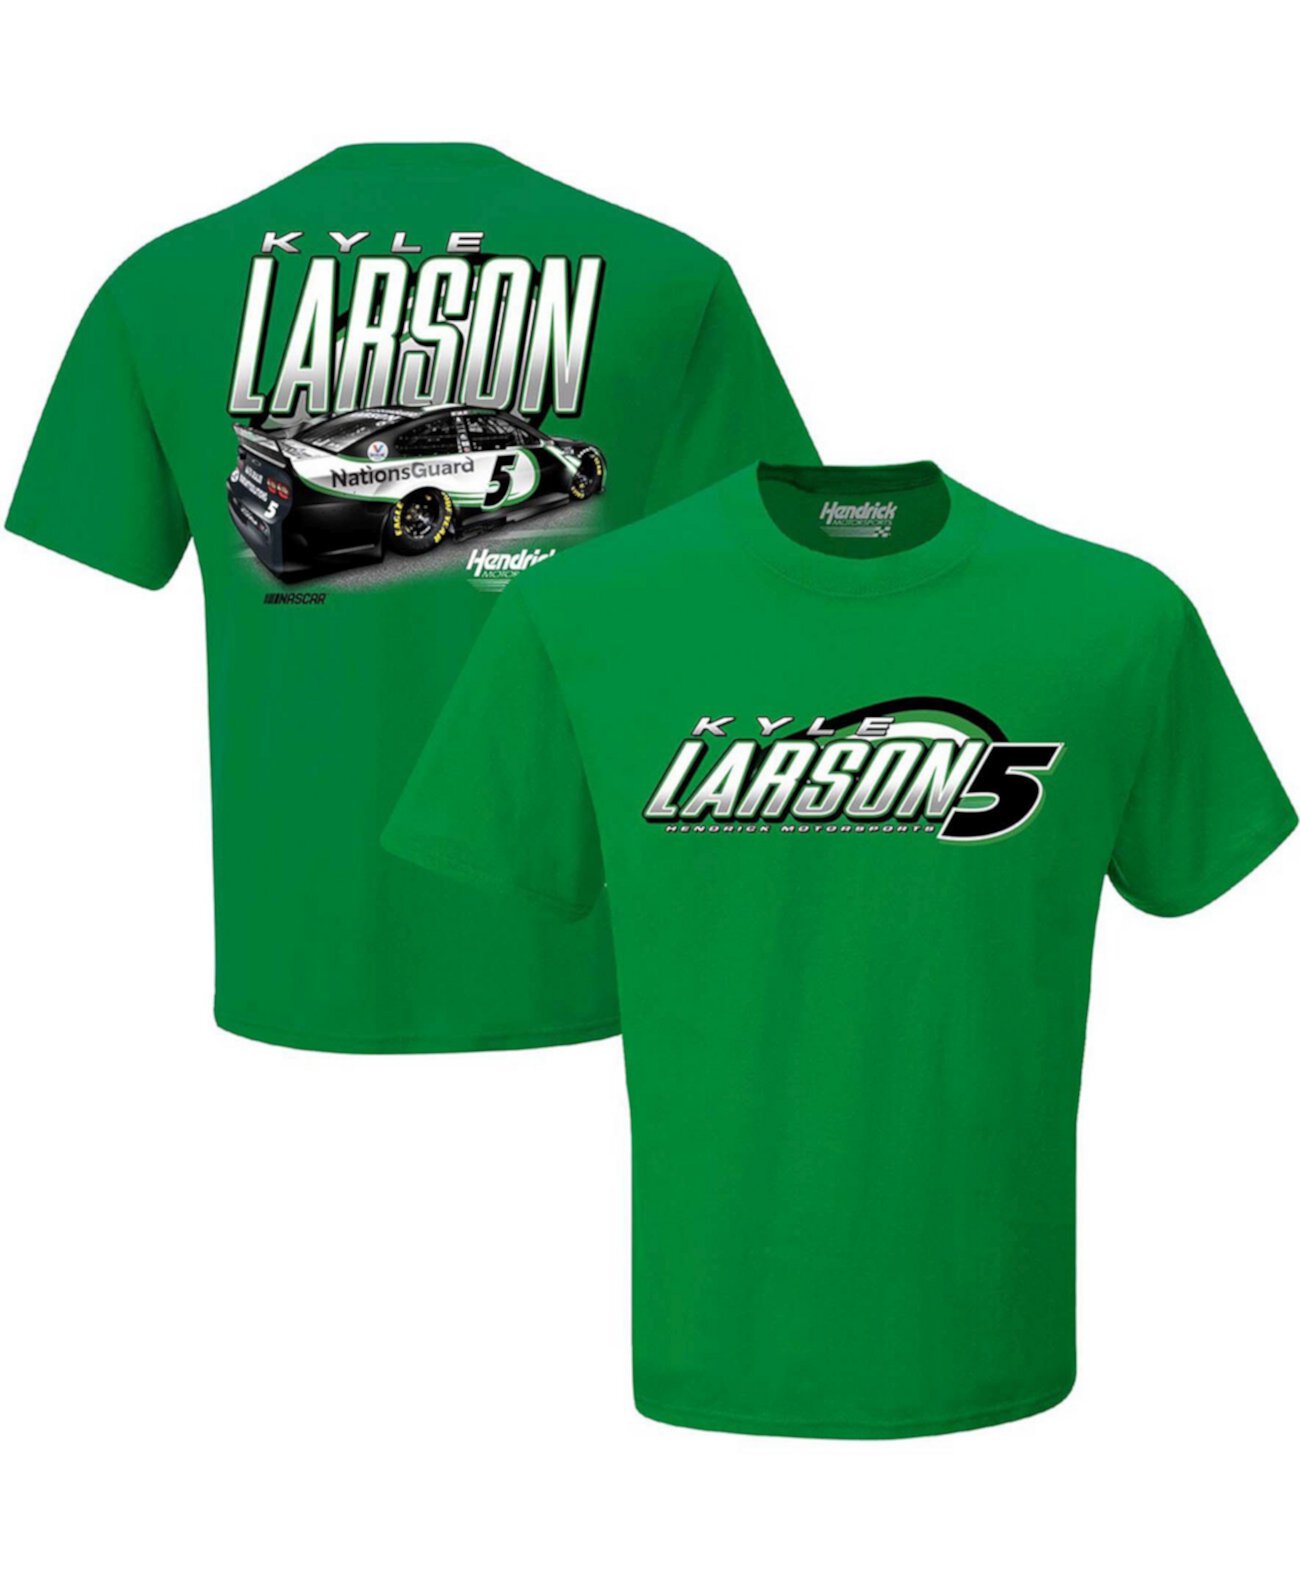 Мужская футболка с рисунком в два пятна Kelly Green Kyle Larson Nations Guard Graphic Hendrick Motorsports Team Collection